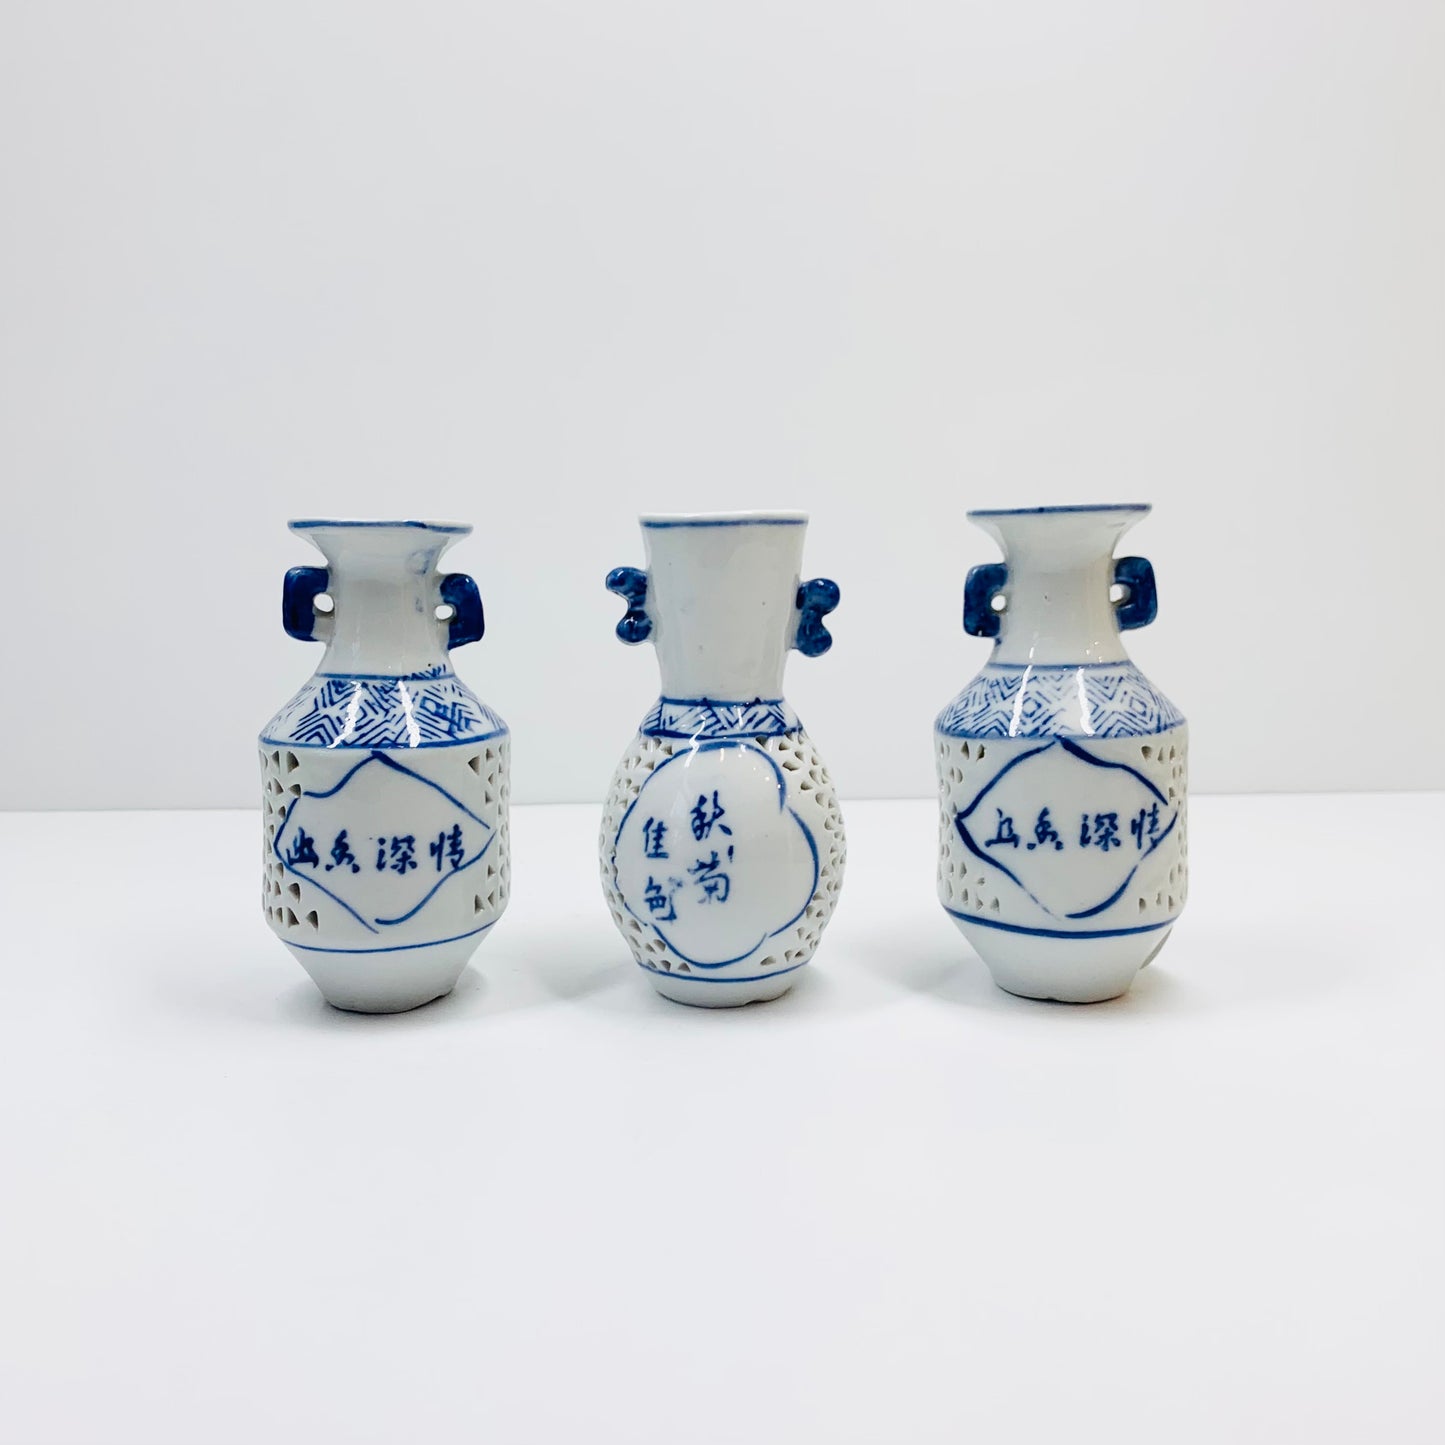 Antique Chinese porcelain miniature vases